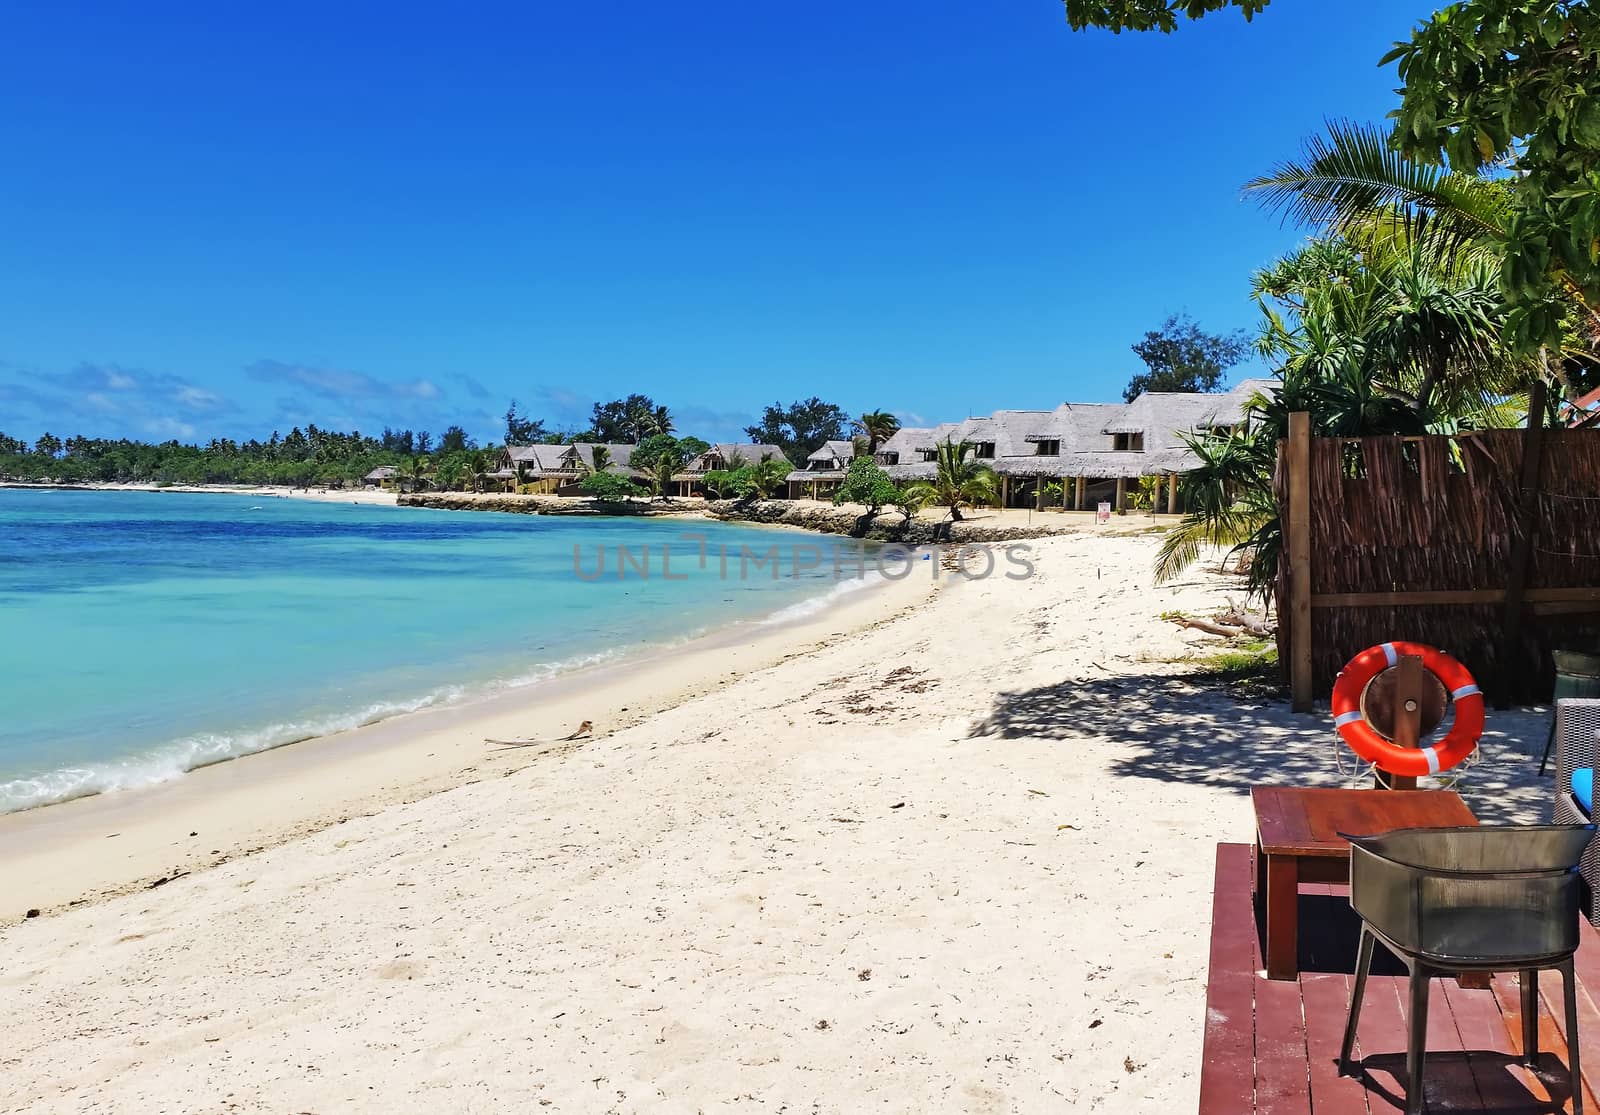 Beach Resort in New Caledonia by jol66